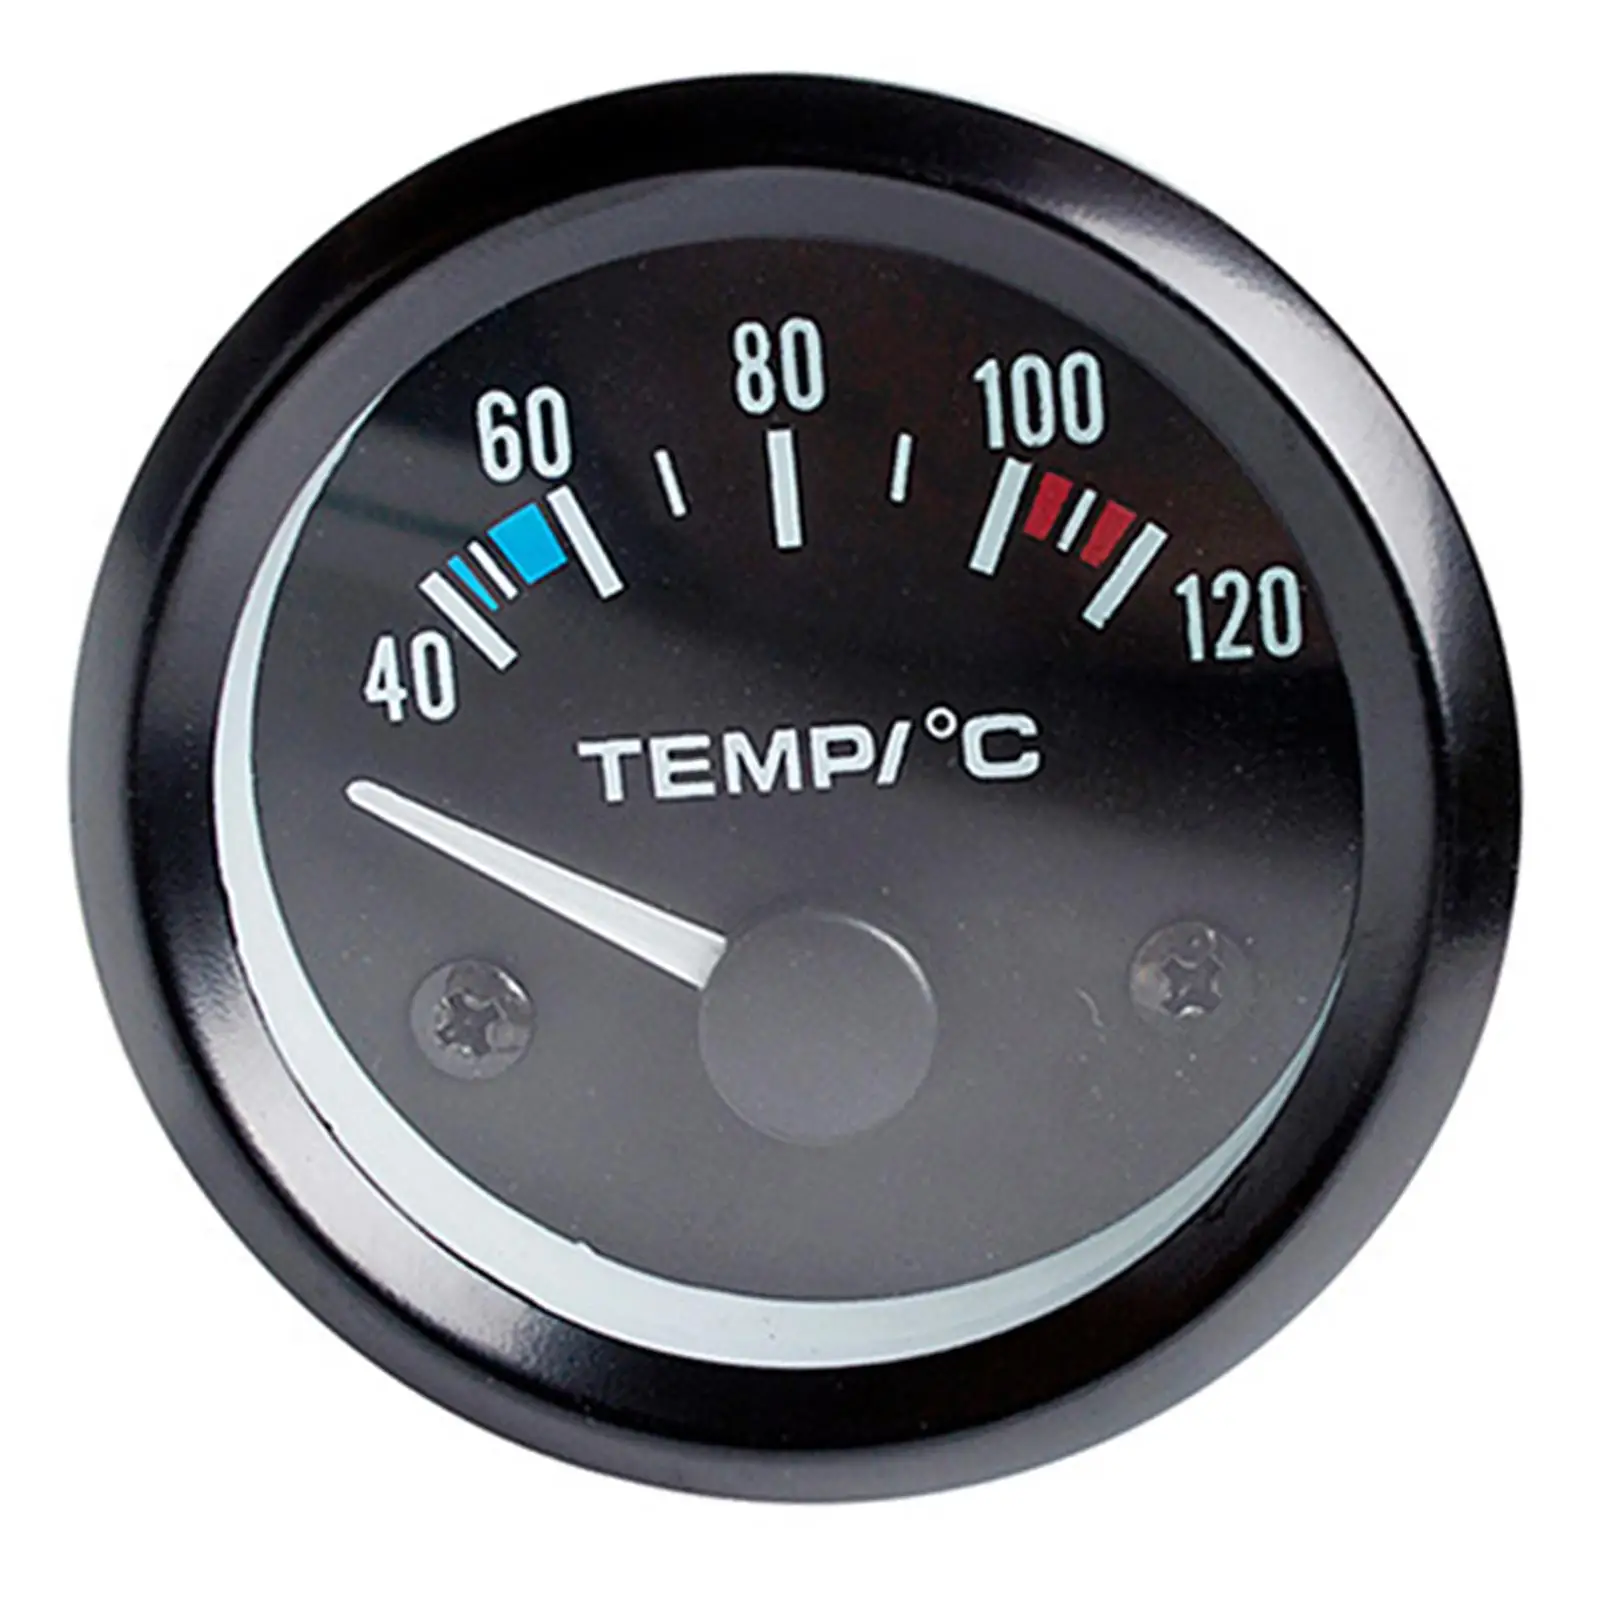 Water Temperature Gauge High Performance Auto Parts 52mm Premium Temperature Meter for Automotive Truck Car Auto Vehicle